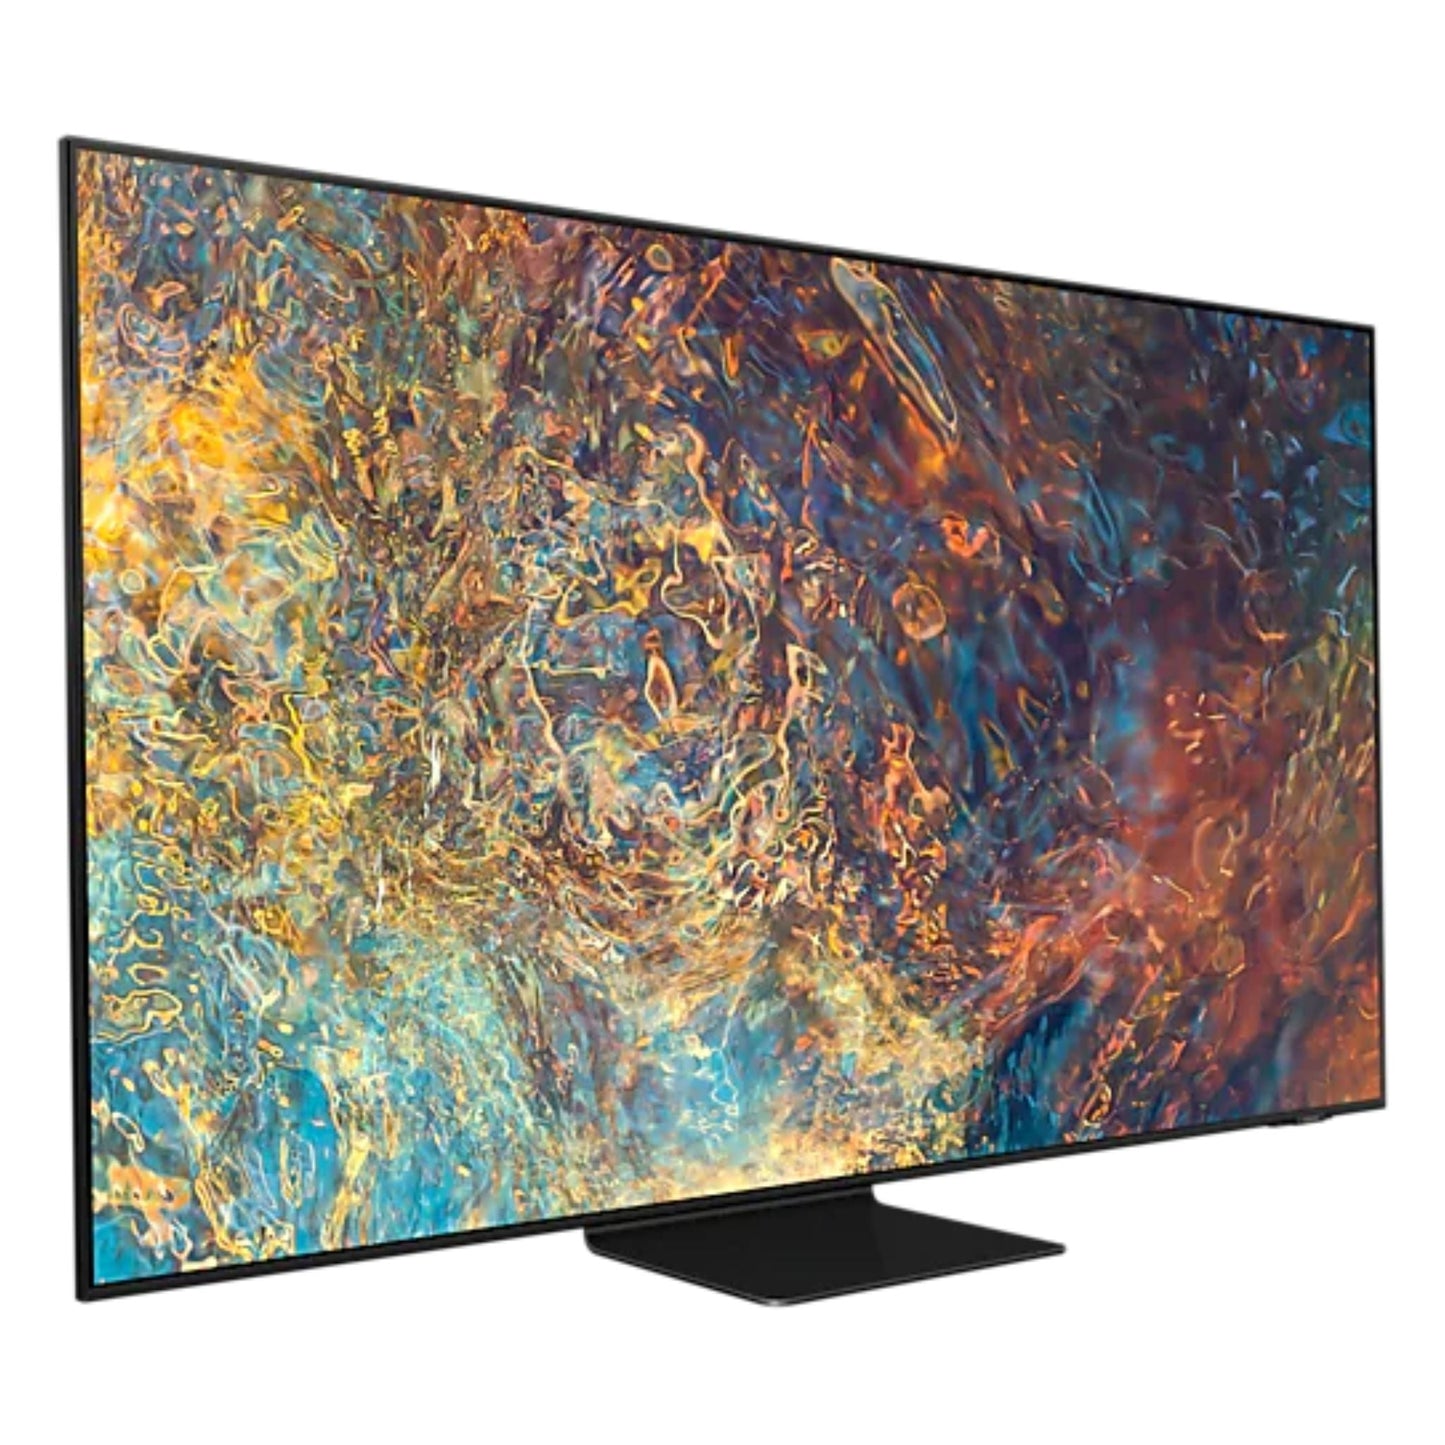 Samsung 65 inch Smart Neo QLED TV, 65QN95A